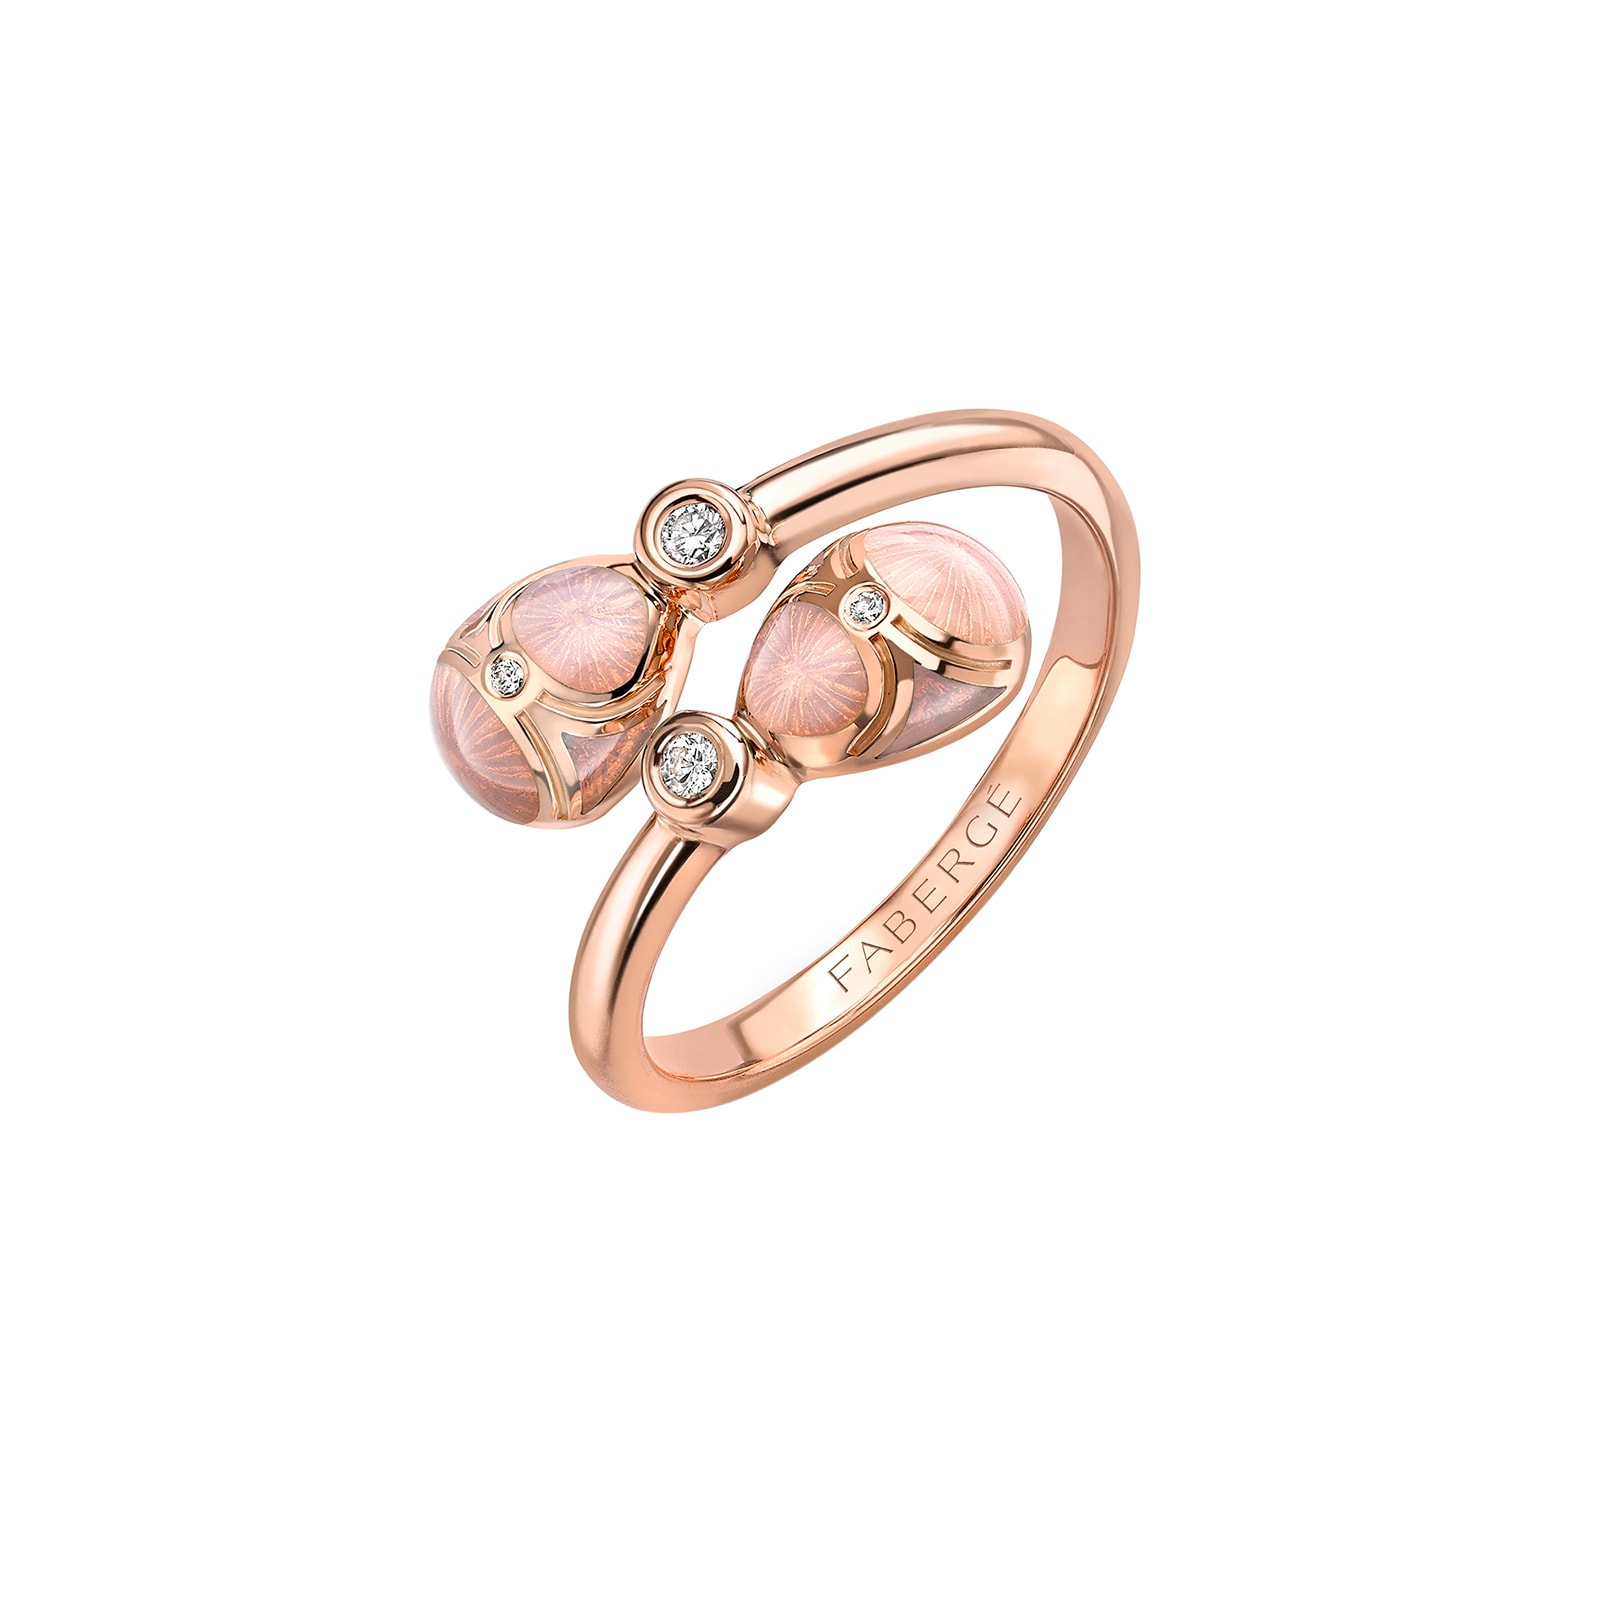 Heritage 18ct Rose Gold Diamond & Pink Enamel Crossover Ring - Ring Size Q